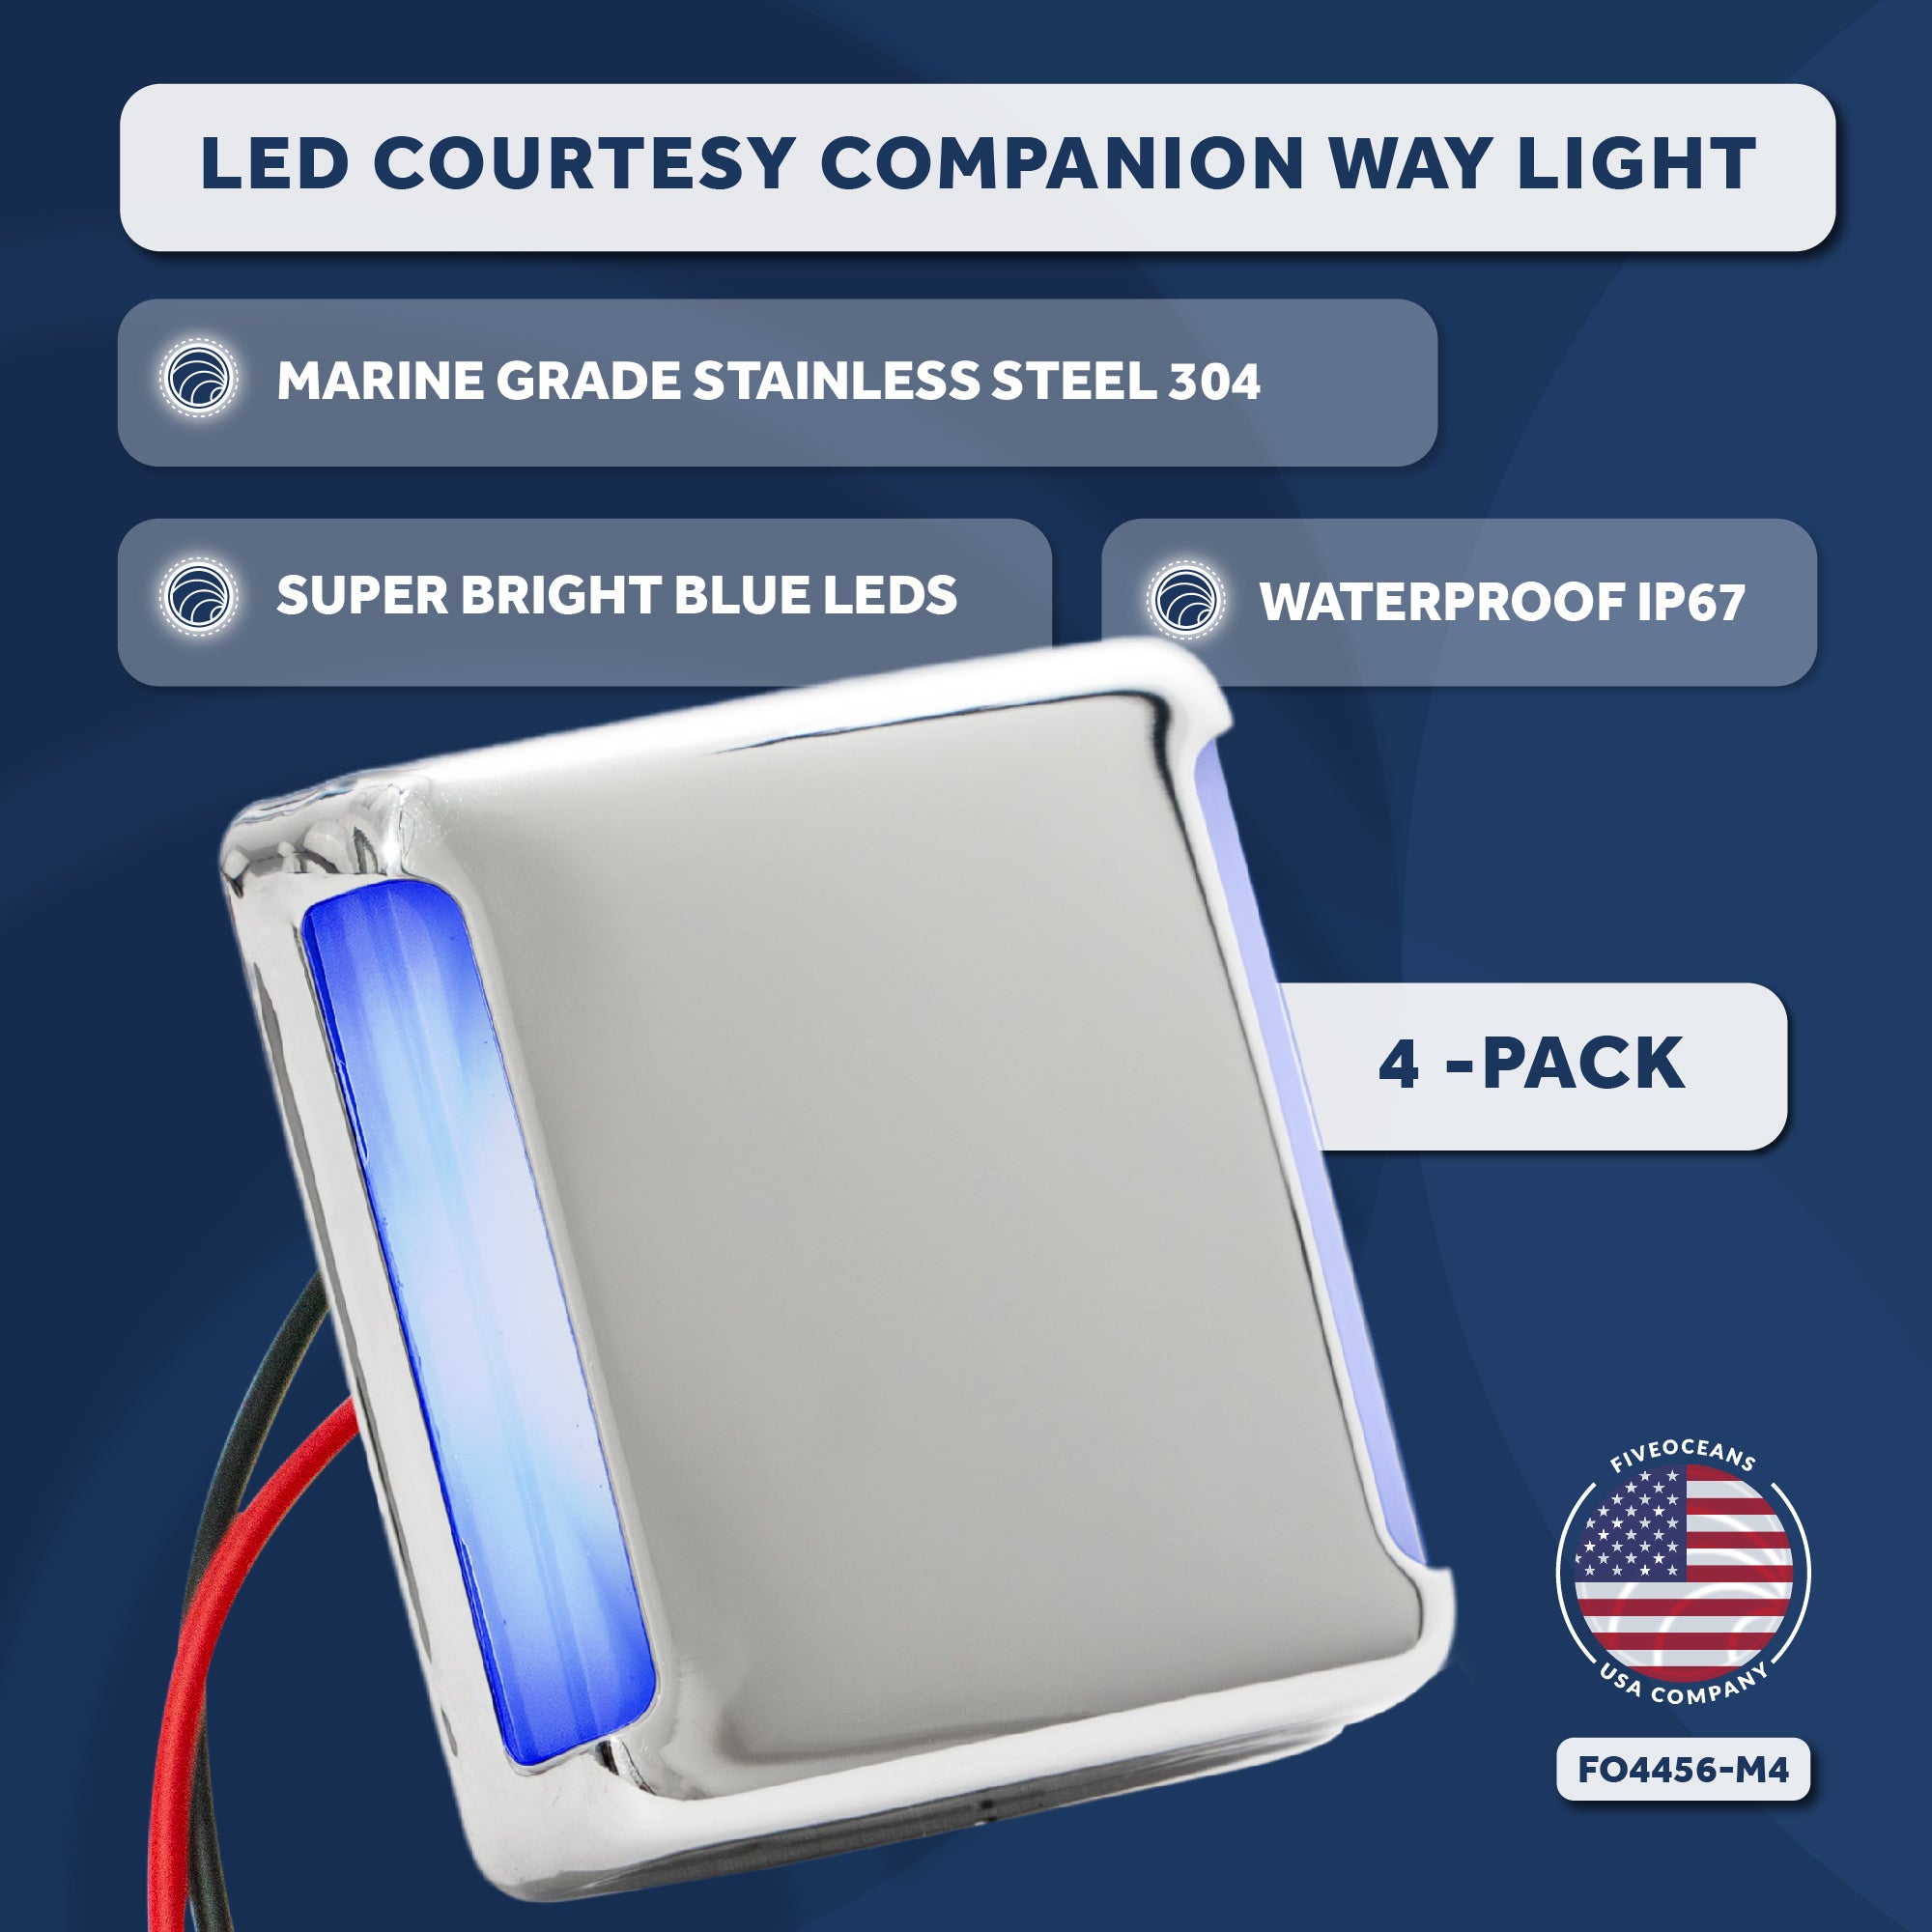 LED Courtesy Companion Way Light, Square, Blue, 4-Pack - FO4456-M4